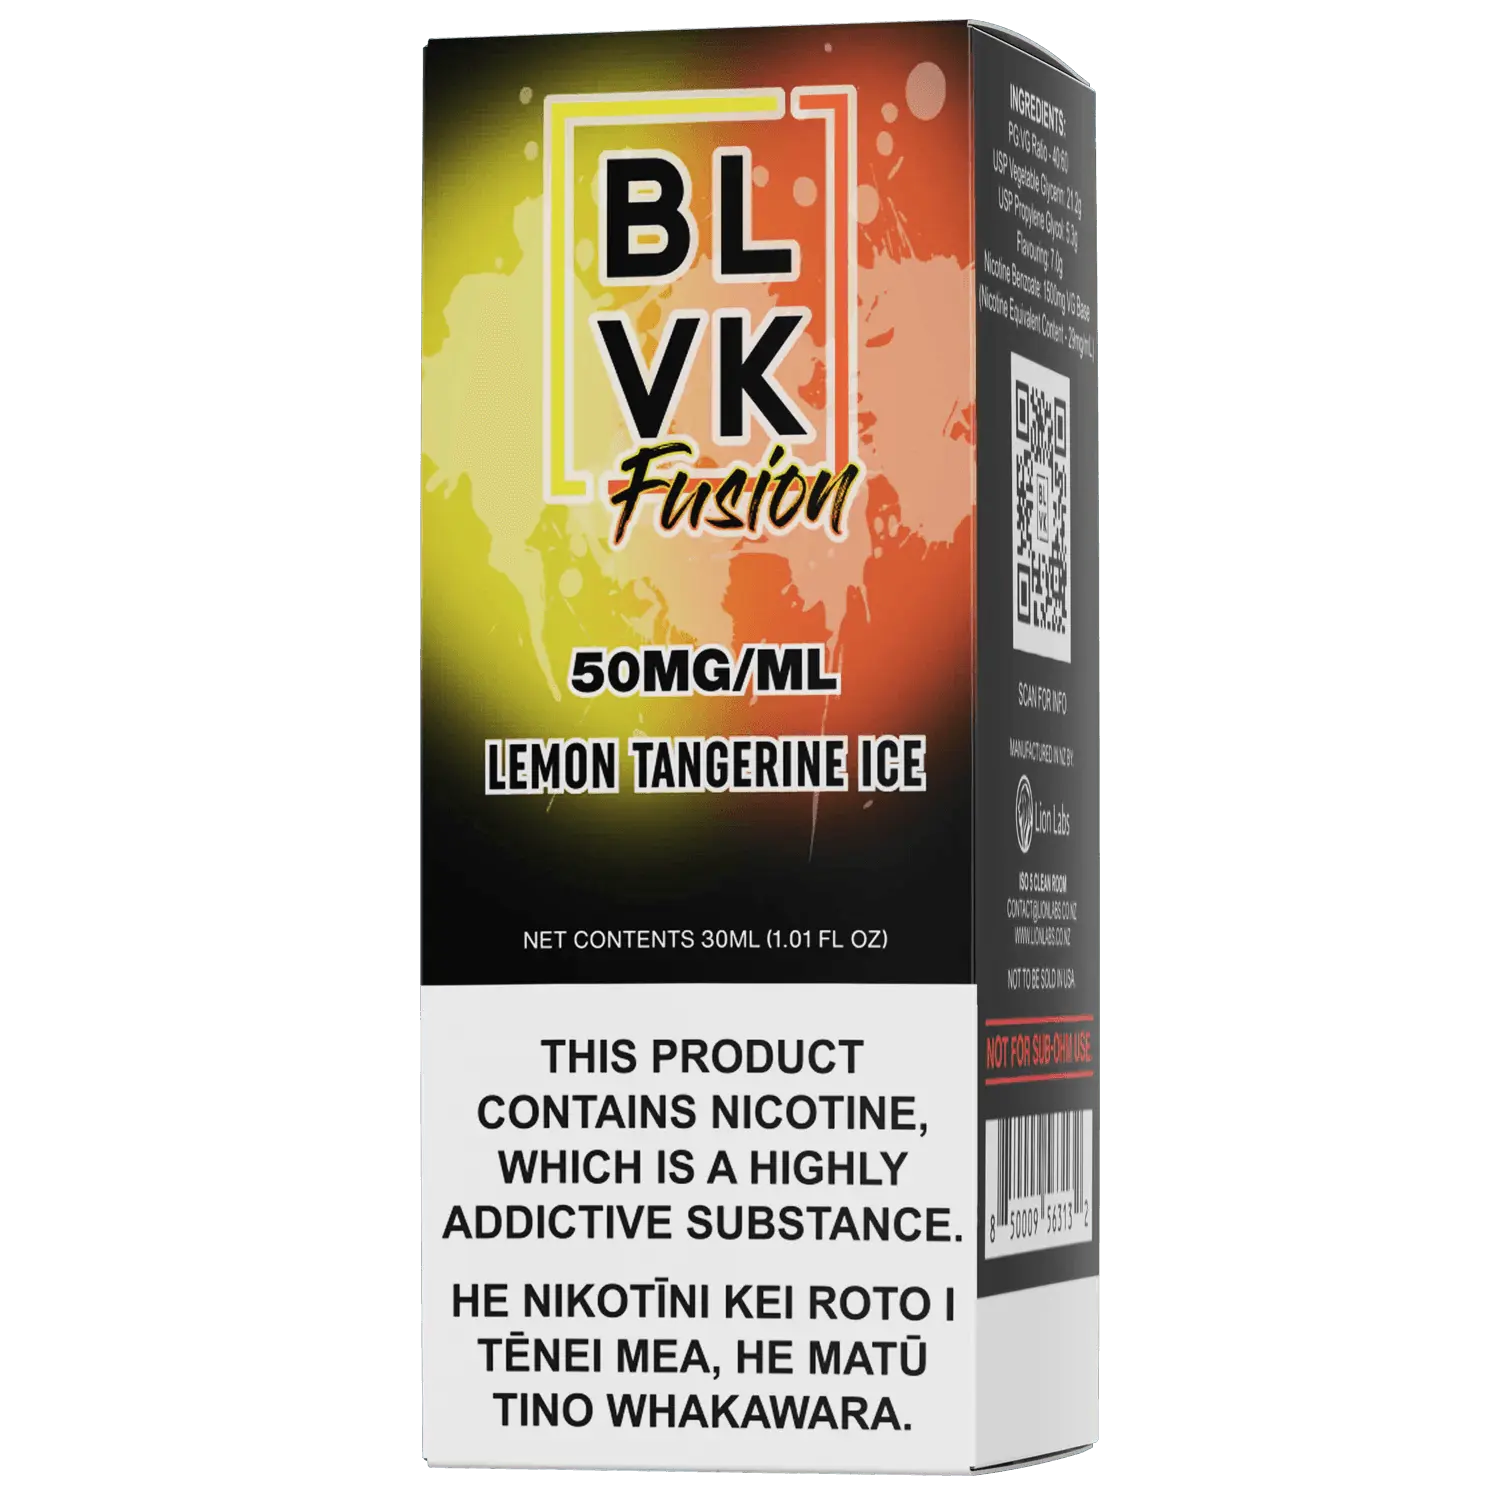 BLVK FUSION - Lemon Tangerine Ice - Vape Vend